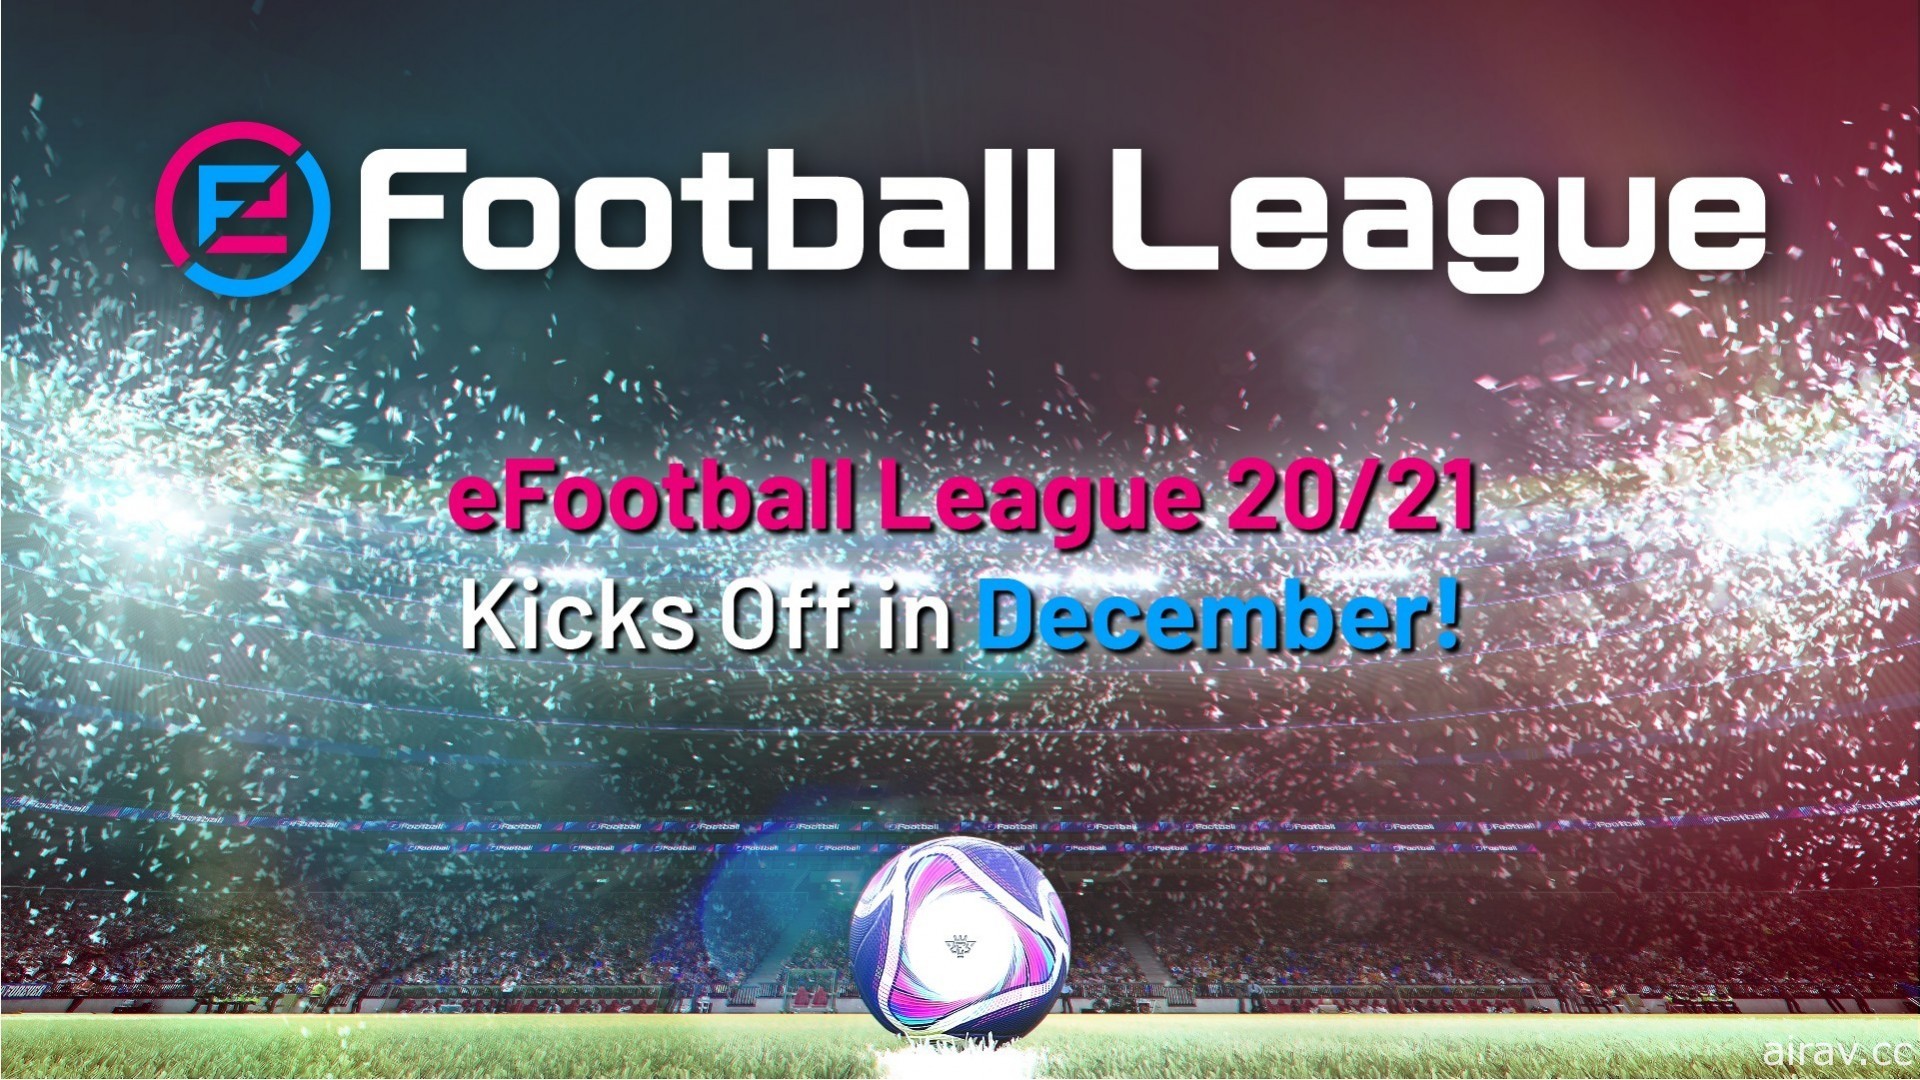 KONAMI 电竞赛事“eFootball.League”2020/21 球季将于 12 月 7 日开赛